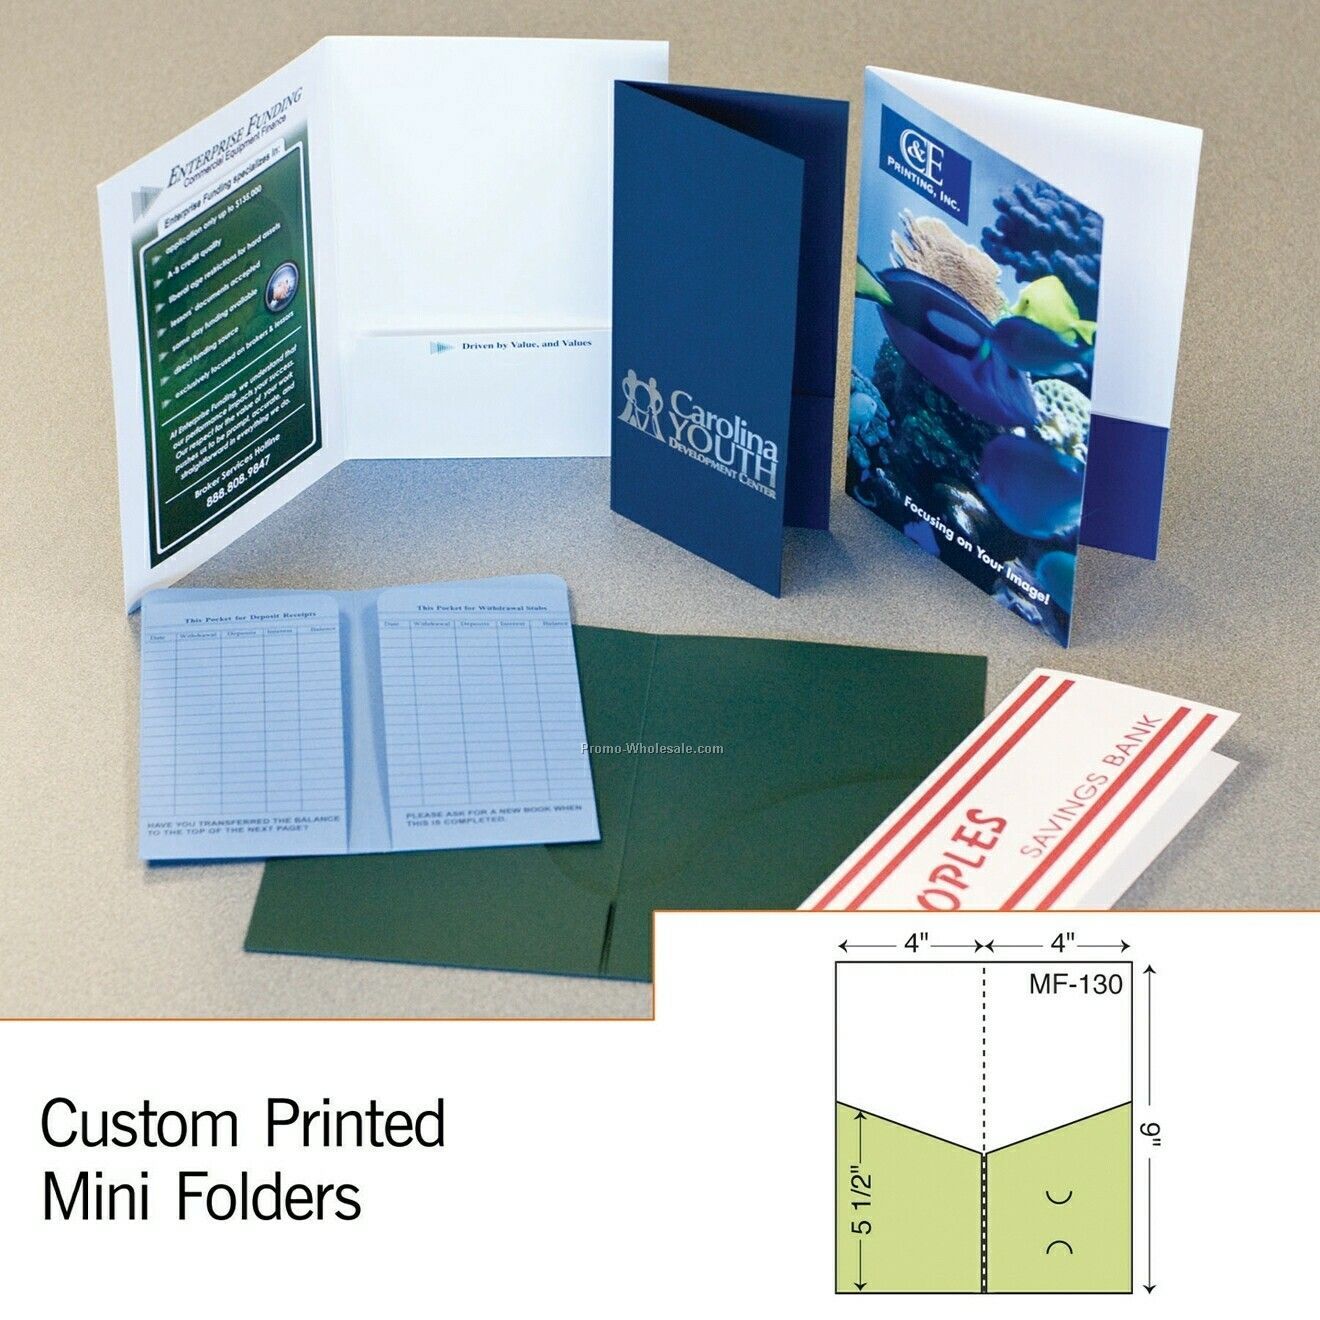 4"x9" Mini Folder W/ Right Pocket (Foil Stamp/Emboss)